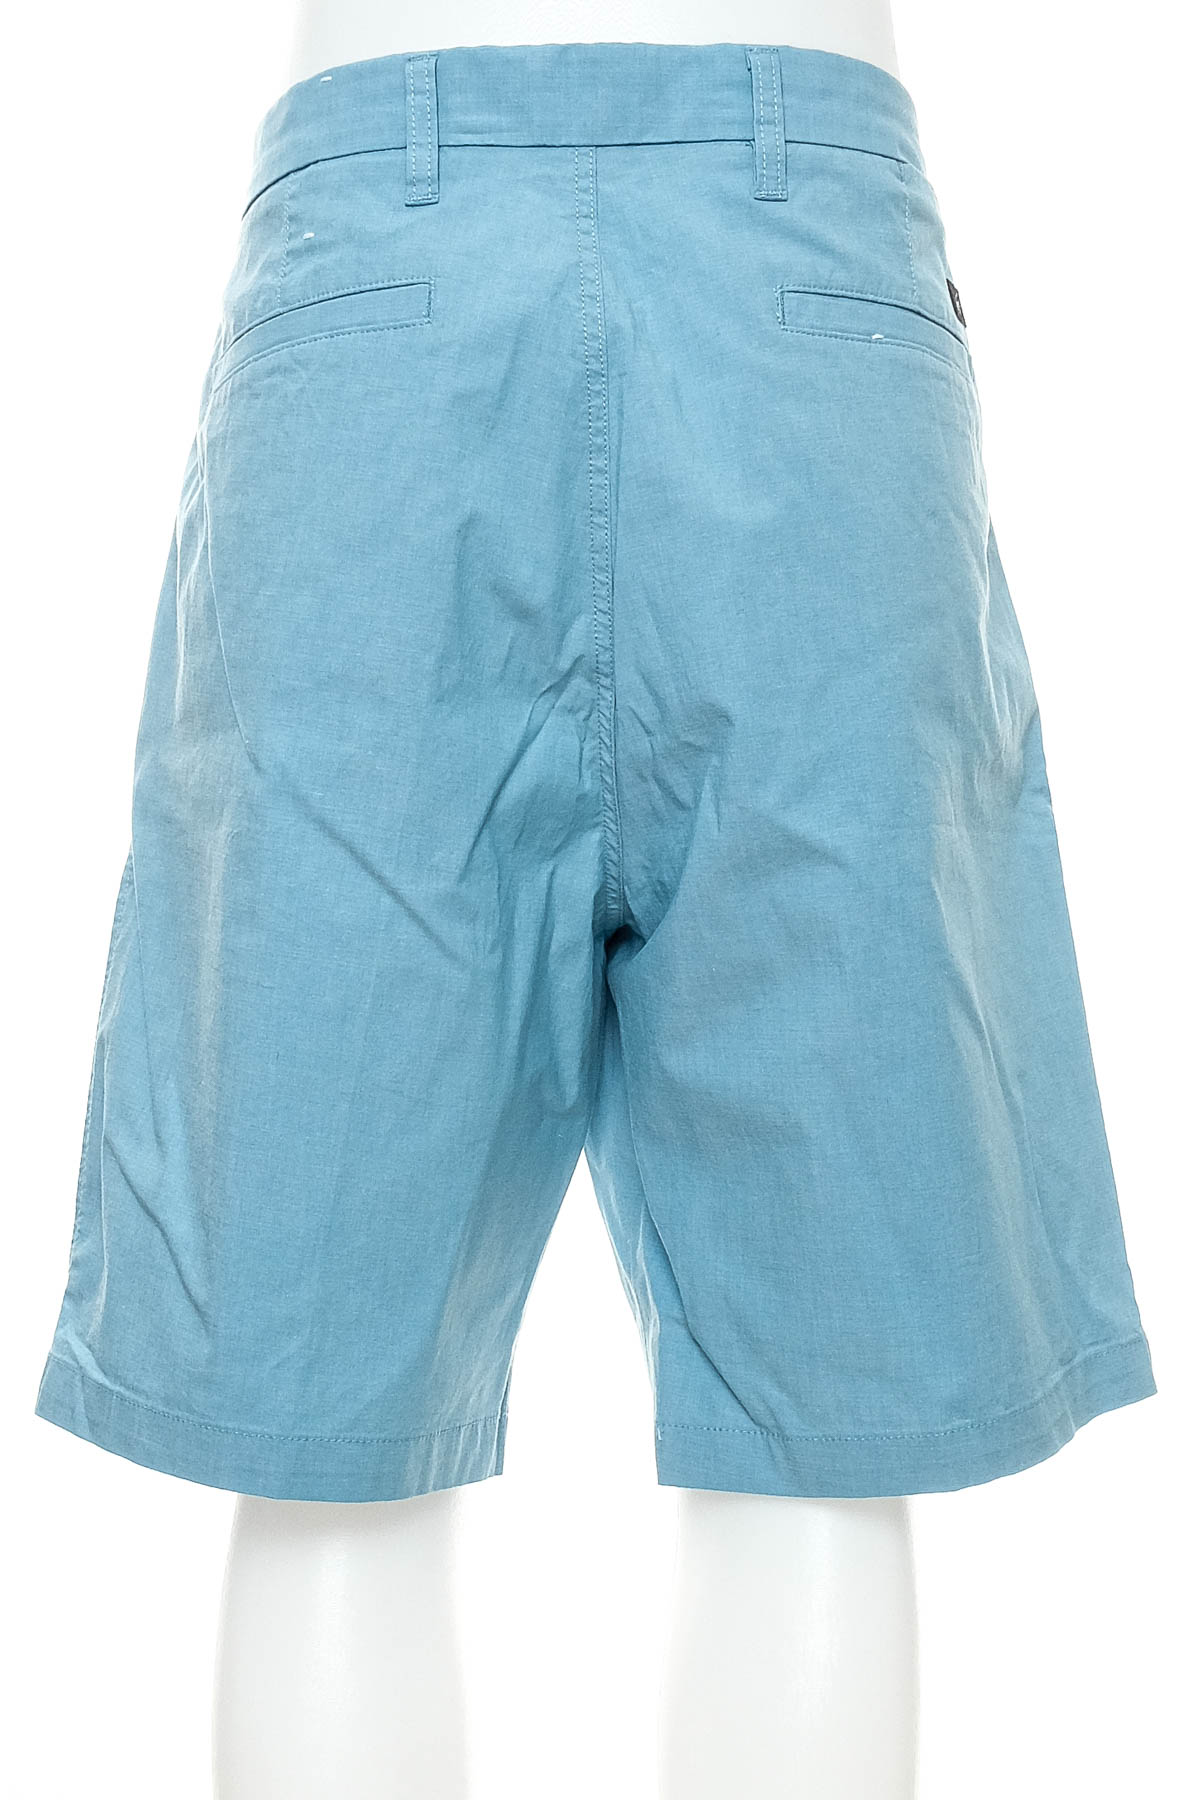 Men's shorts - DOCKERS - 1